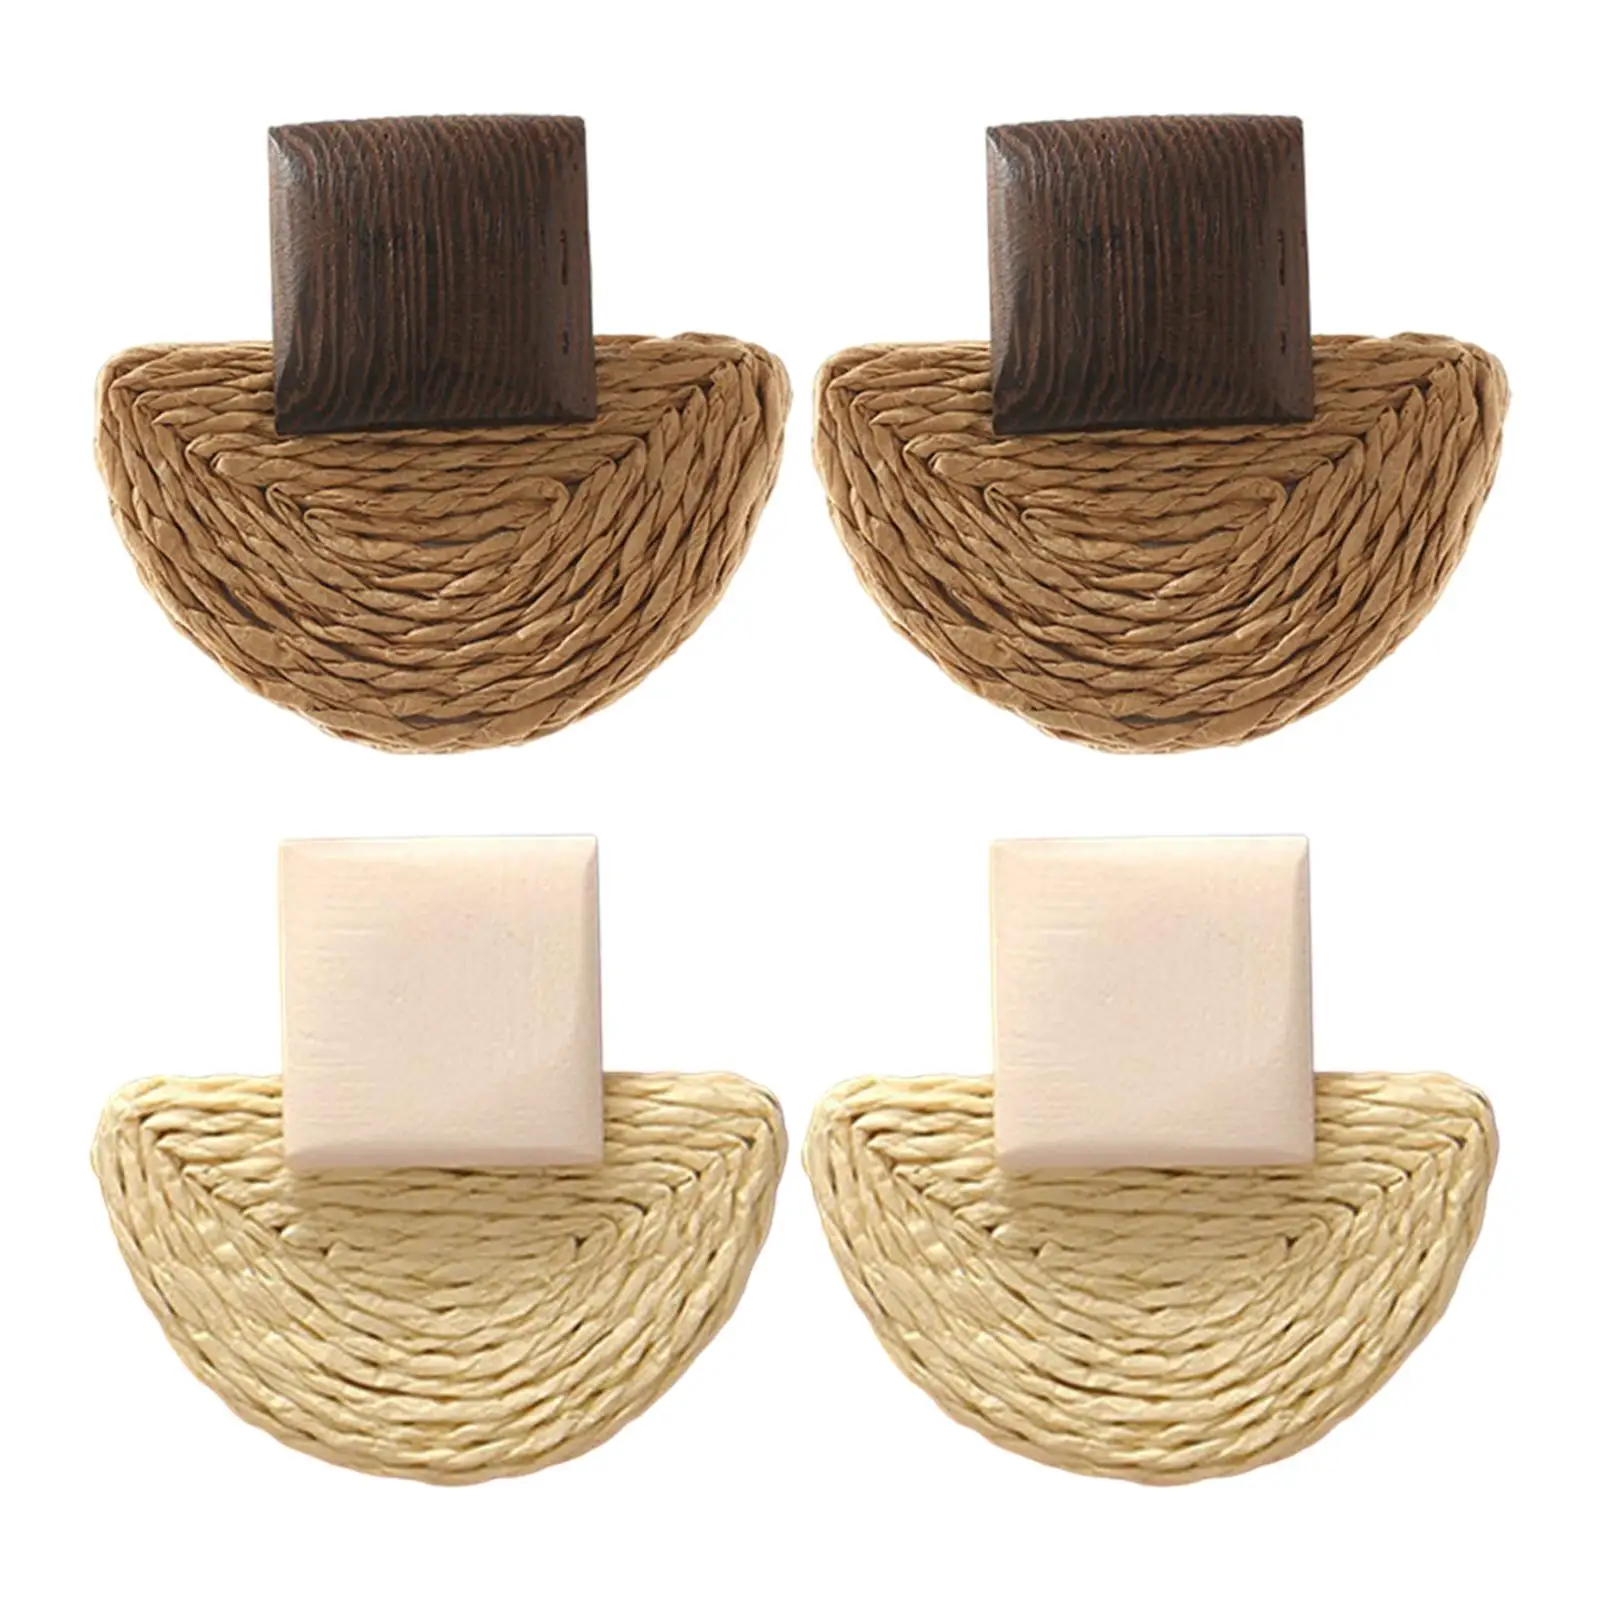 Rattan Dangle Earrings, Boho Vintage Braid Lightweight Gifts Handmade Jewelry Hoop Earrings, for  Holidays Beach  Mother